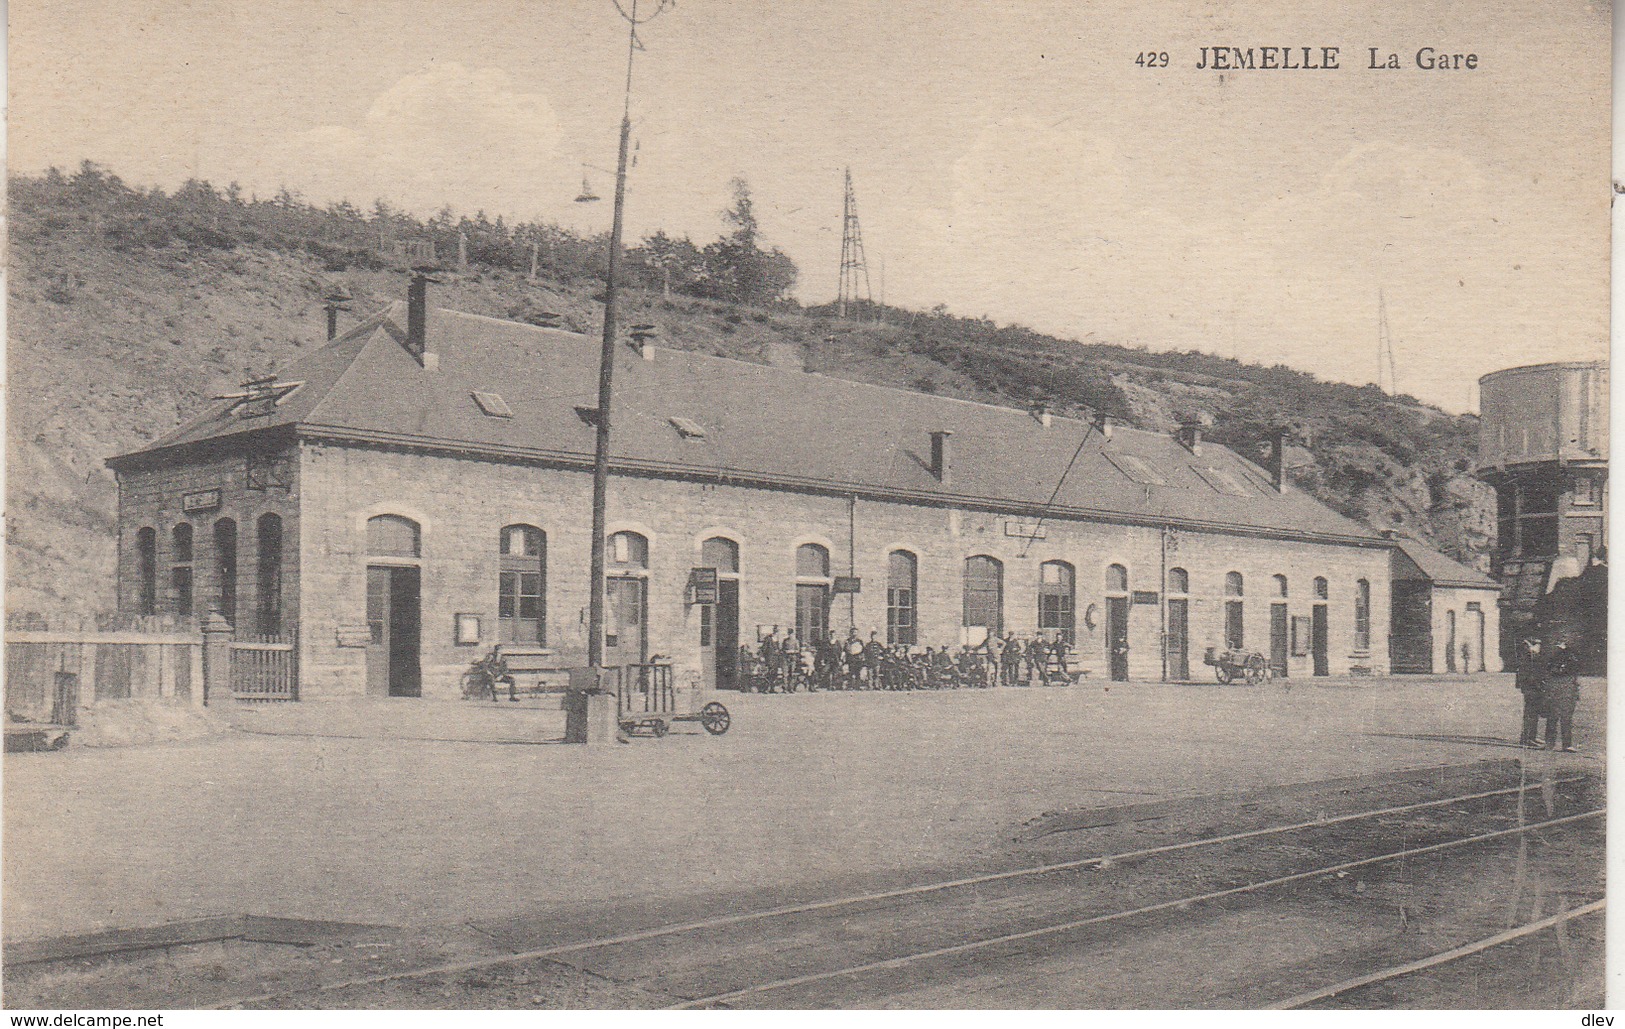 Jemelle - La Gare - Animé - Edition Chaudoir N) 429 - Stations - Zonder Treinen